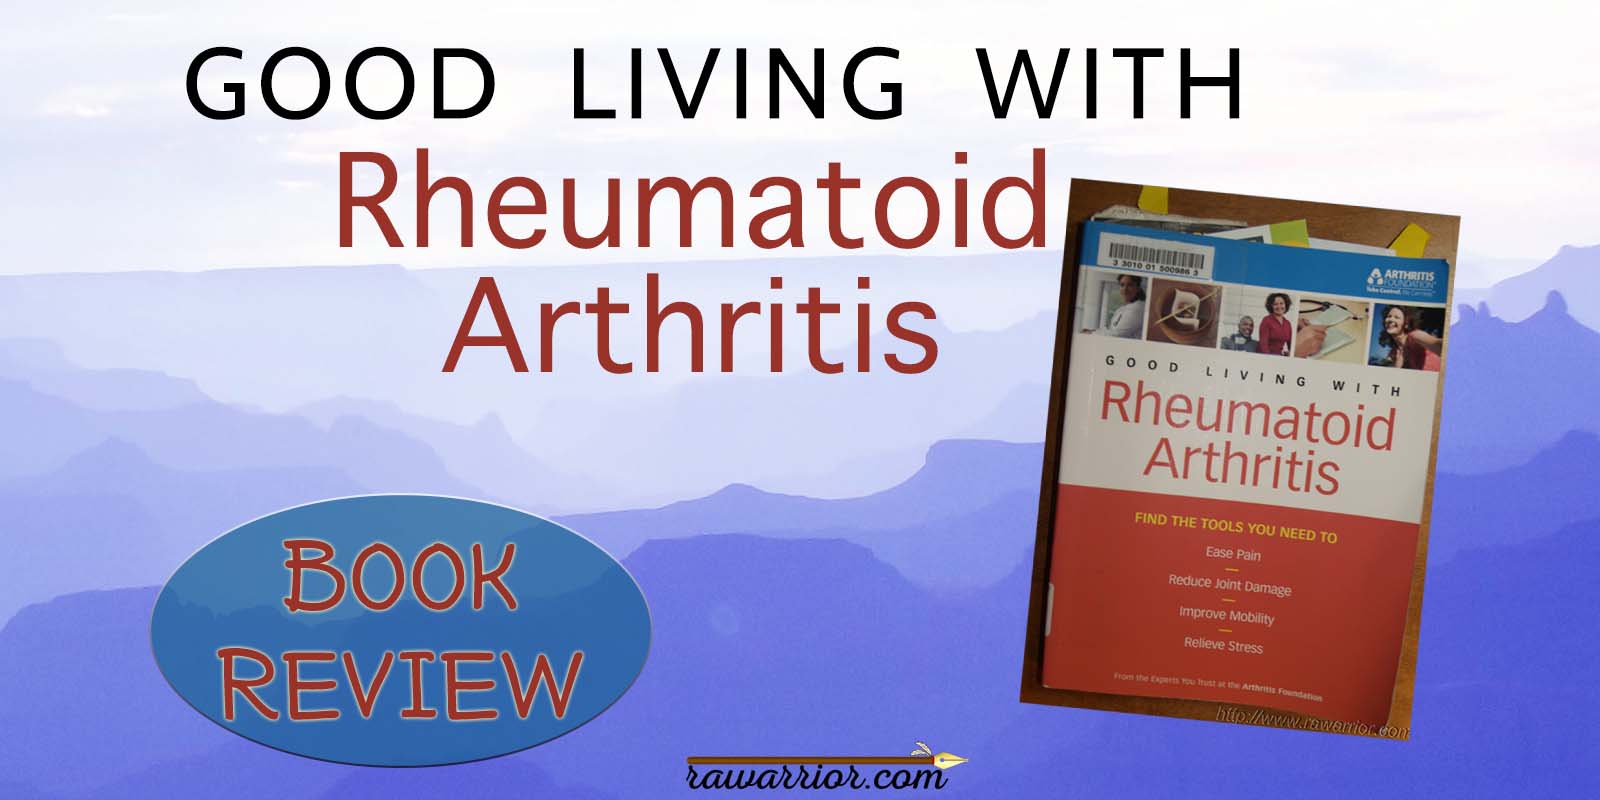 Good Living with Rheumatoid Arthritis